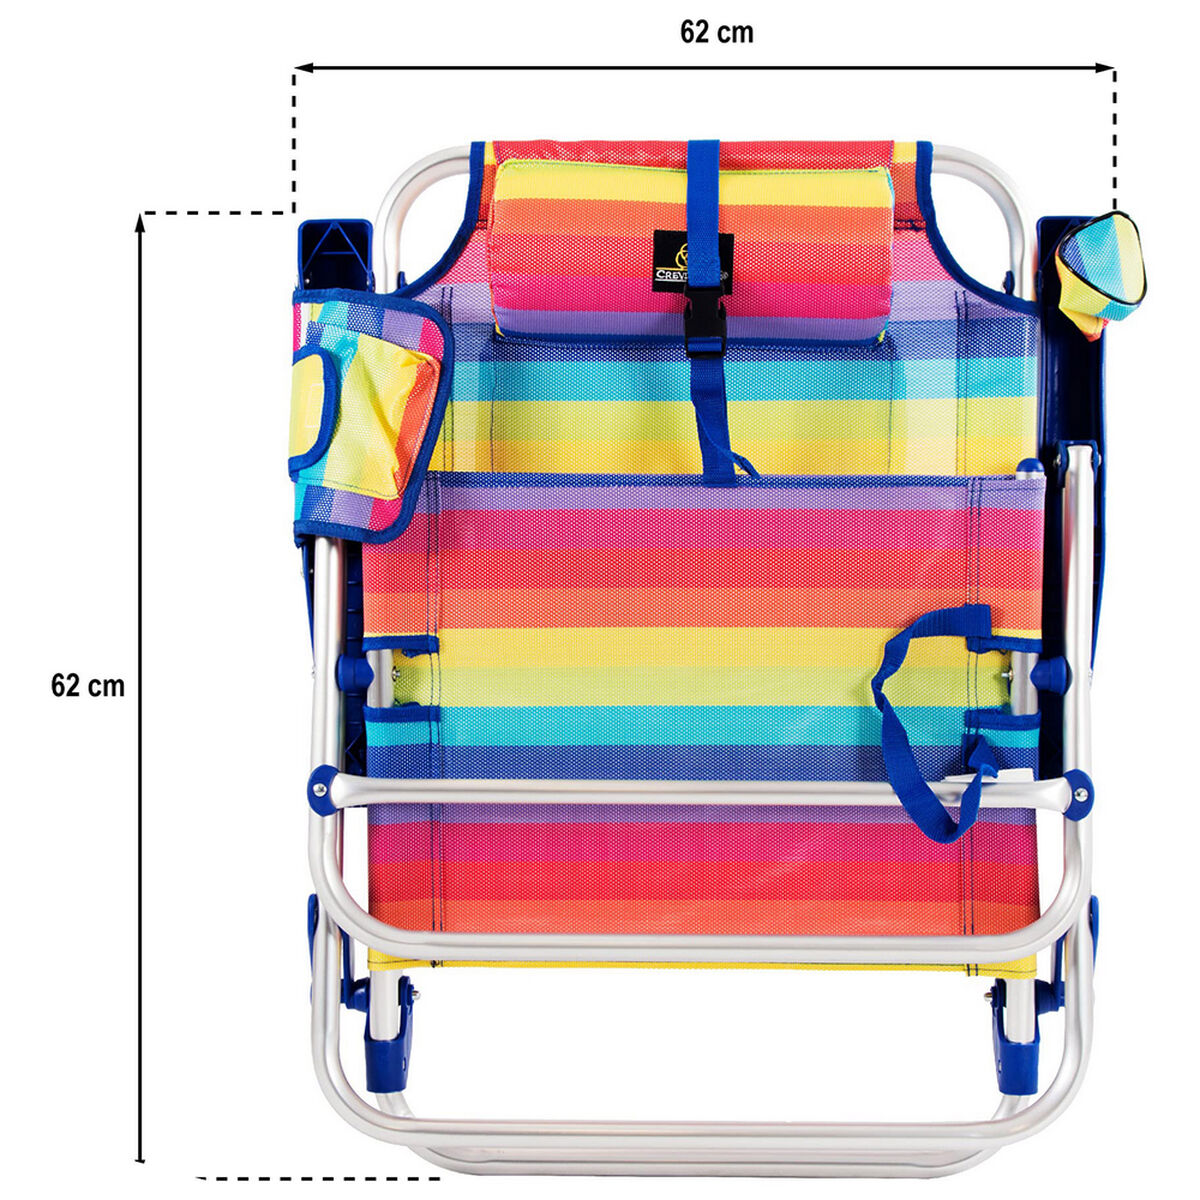 Folding Chair with Cooler Textiline Coral 55 x 24 x 63 cm Multicolour